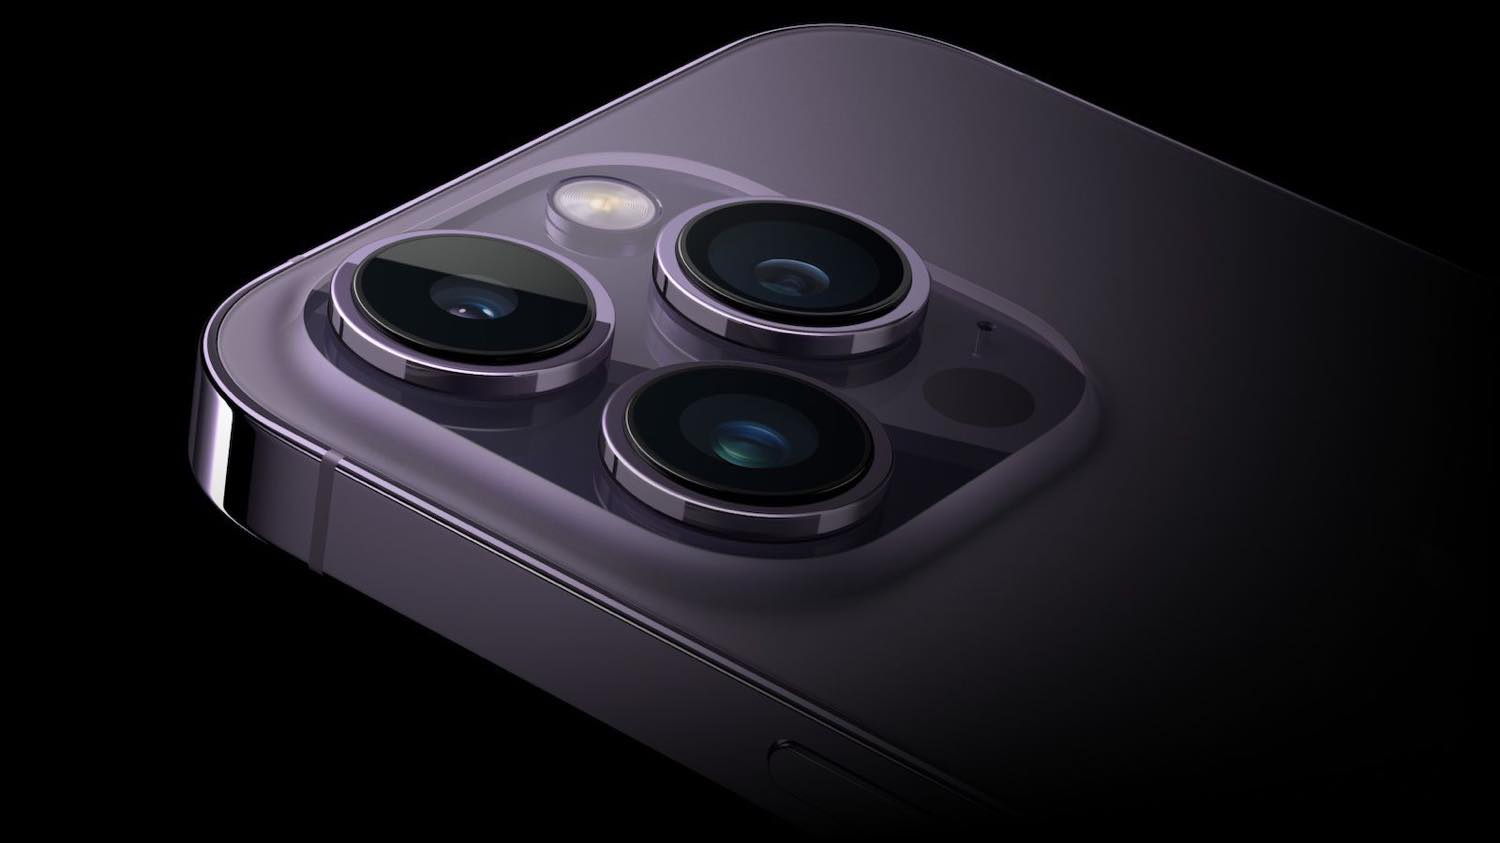 ｢iPhone 15 Pro｣は改良されたLiDARスキャナを搭載か